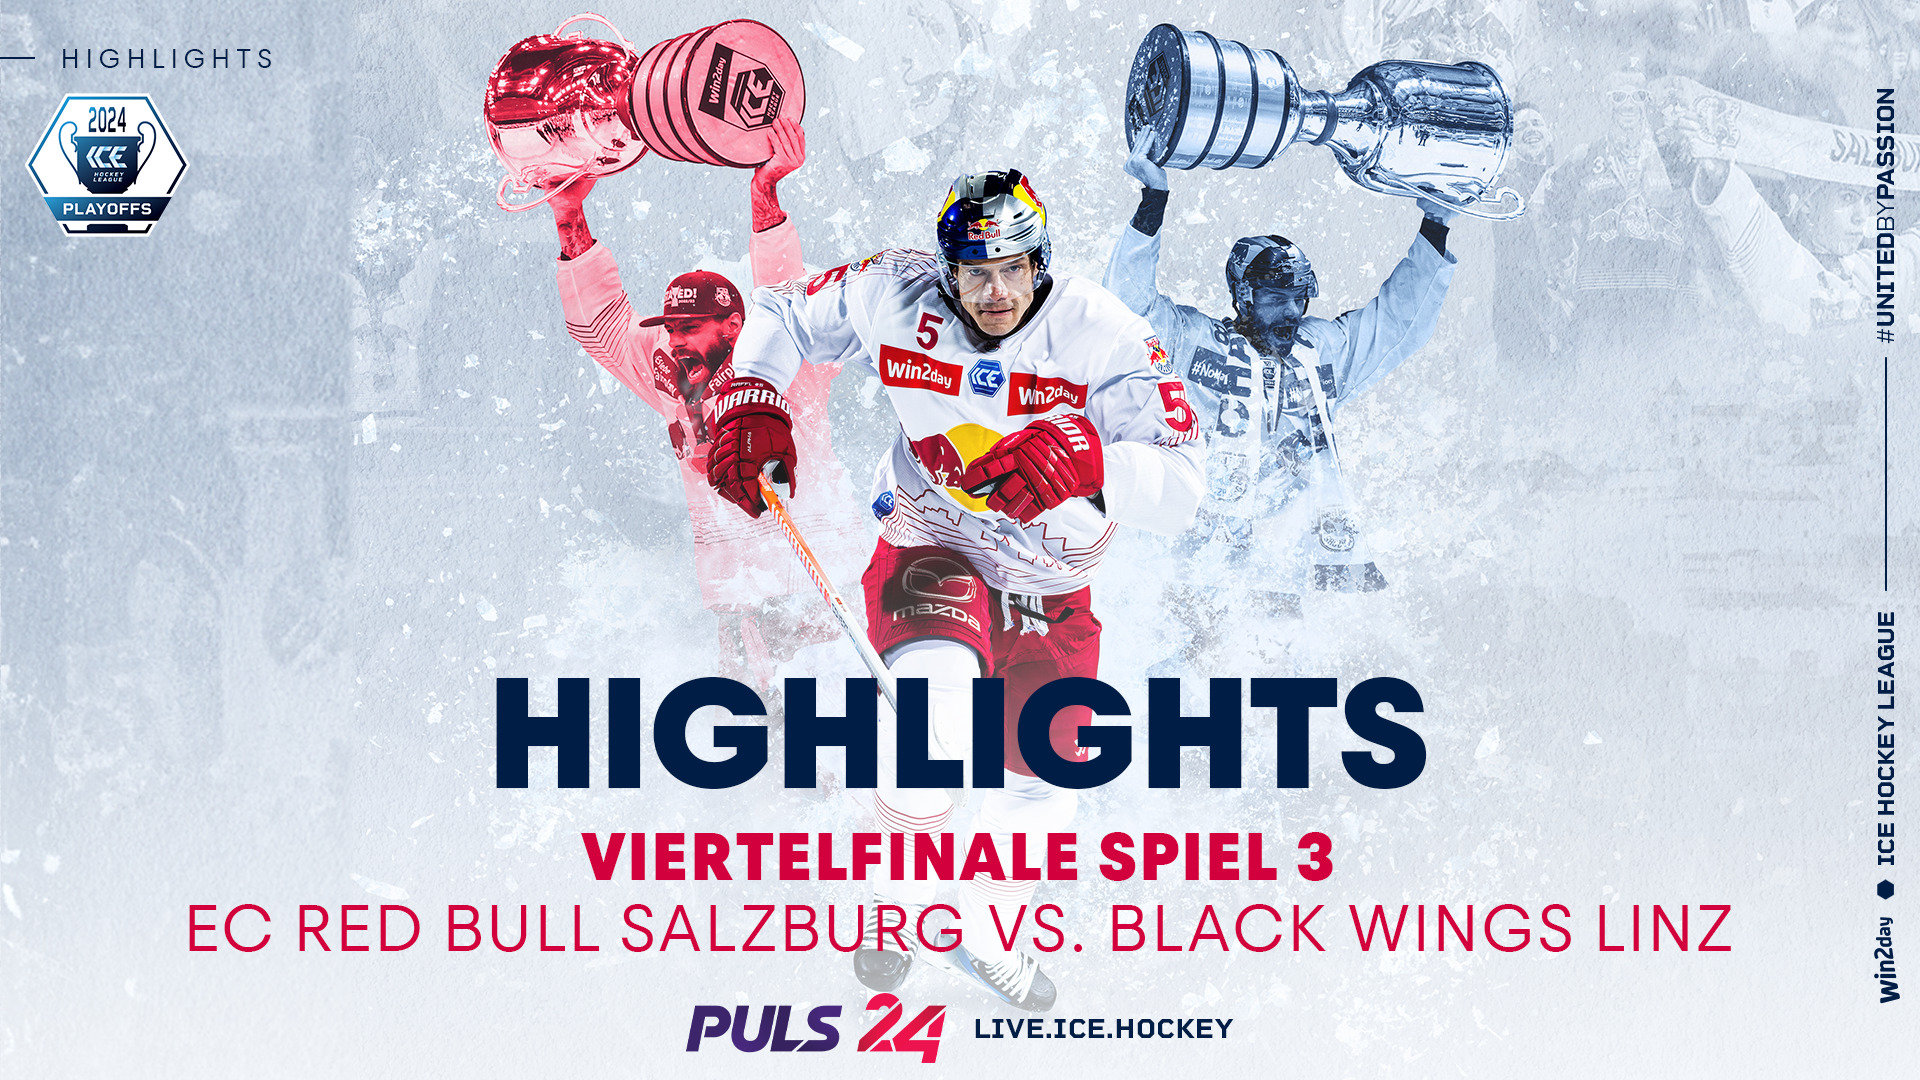 Highlights Viertelfinale 3: EC Red Bull Salzburg vs. Black Wings Linz